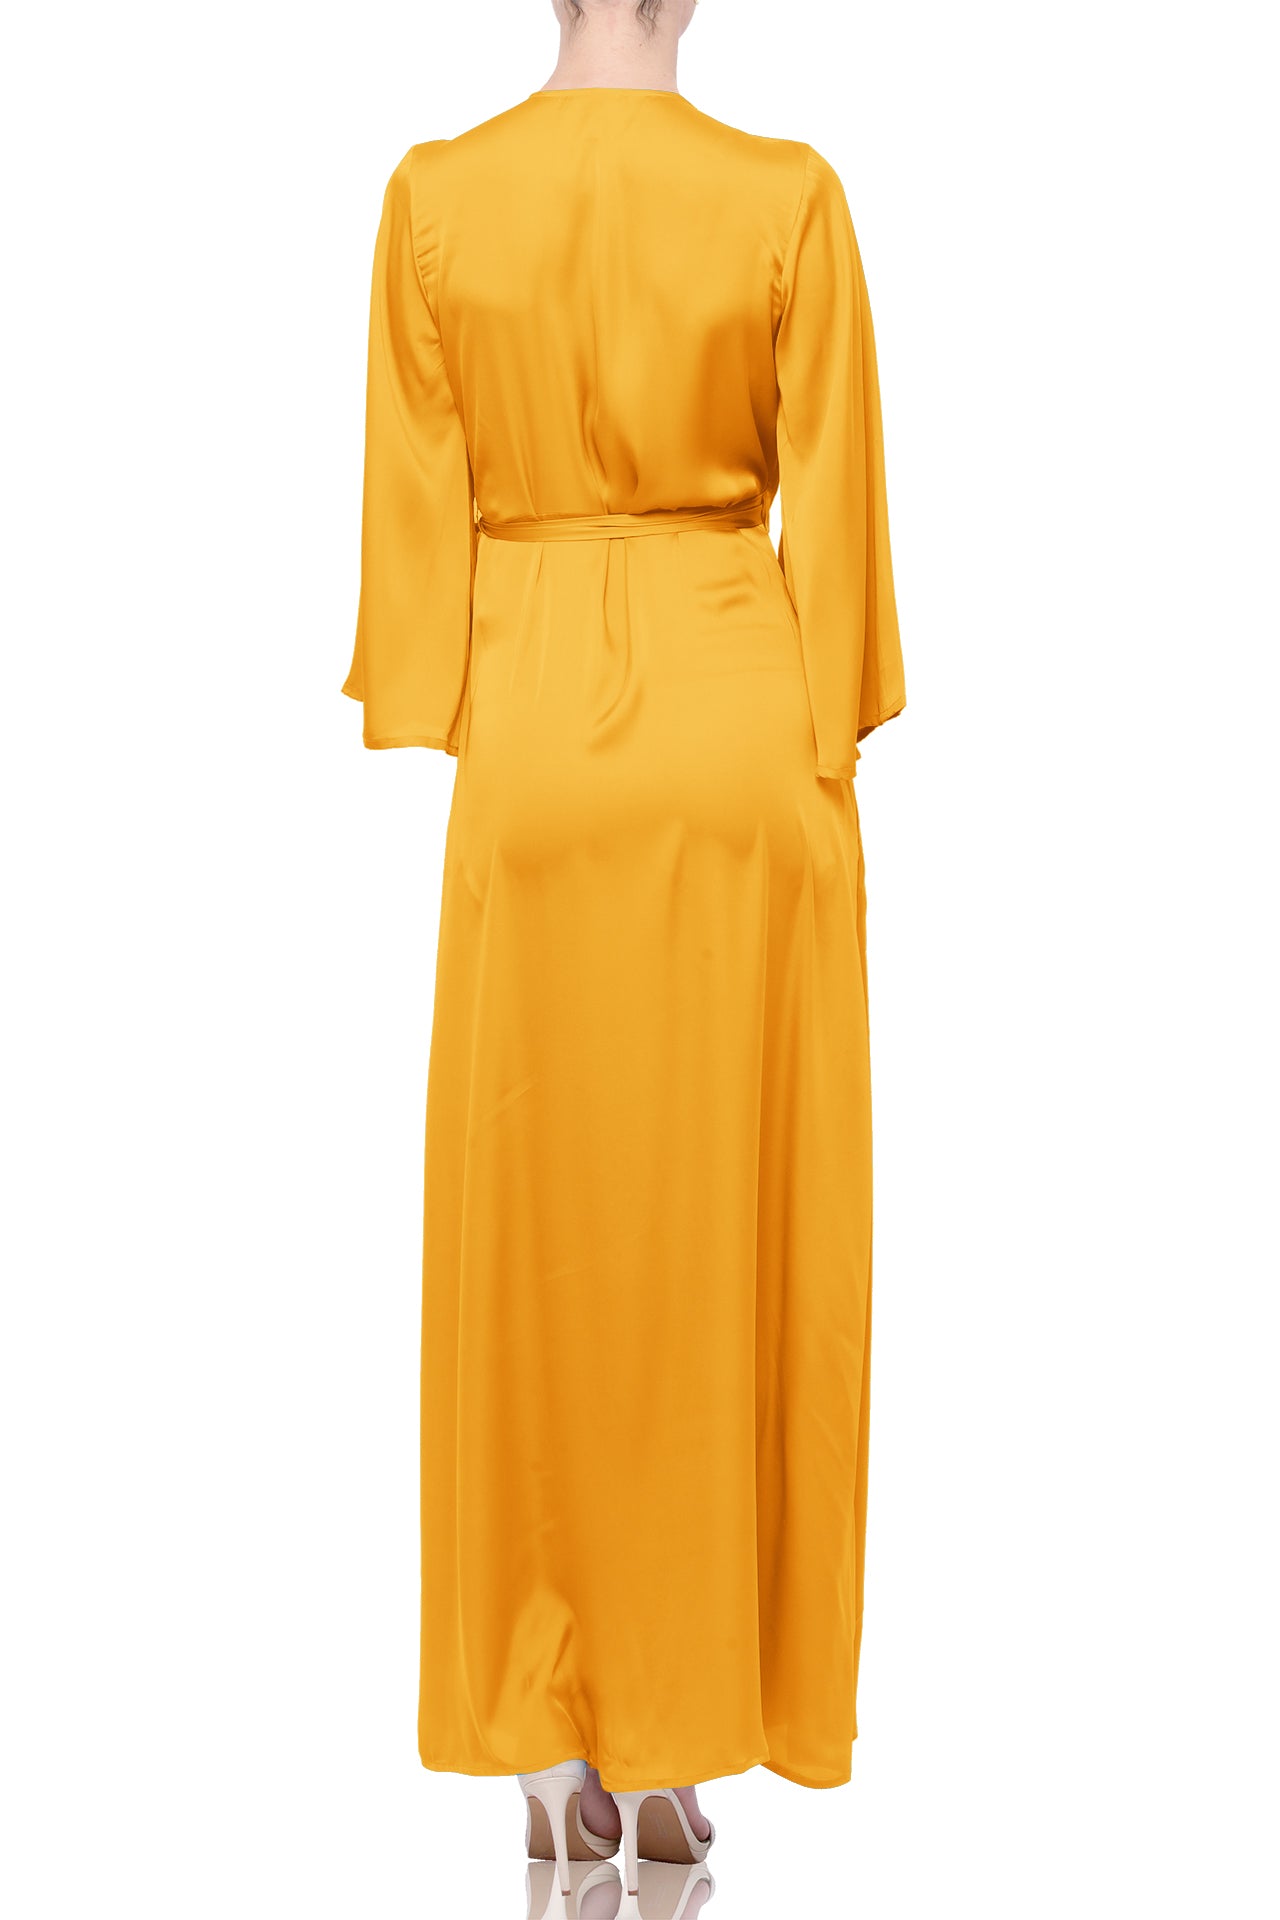 Leo Orange Full Sleeve Designer Maxi Wrap Dress